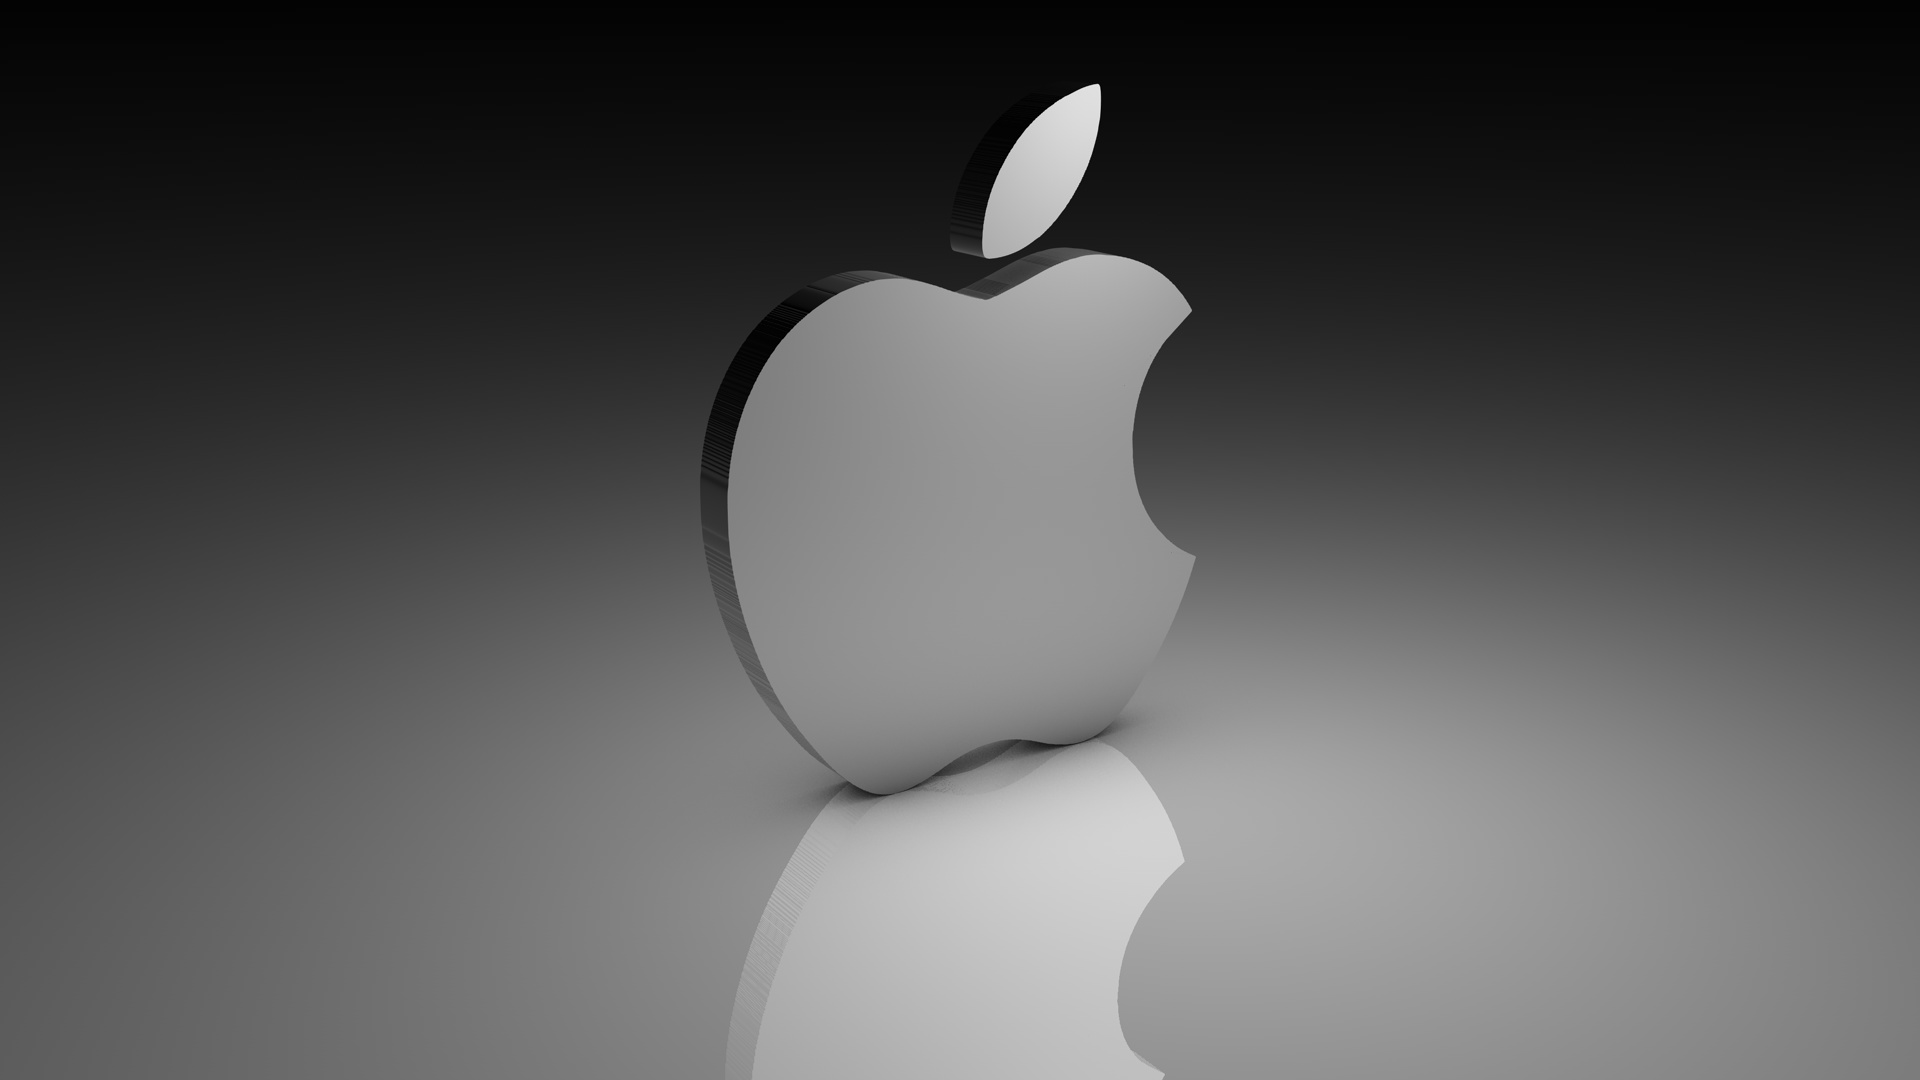 Wallpaper ID 534681  4K 4K Apple Apple logo Code Minimal Dark  background Black free download